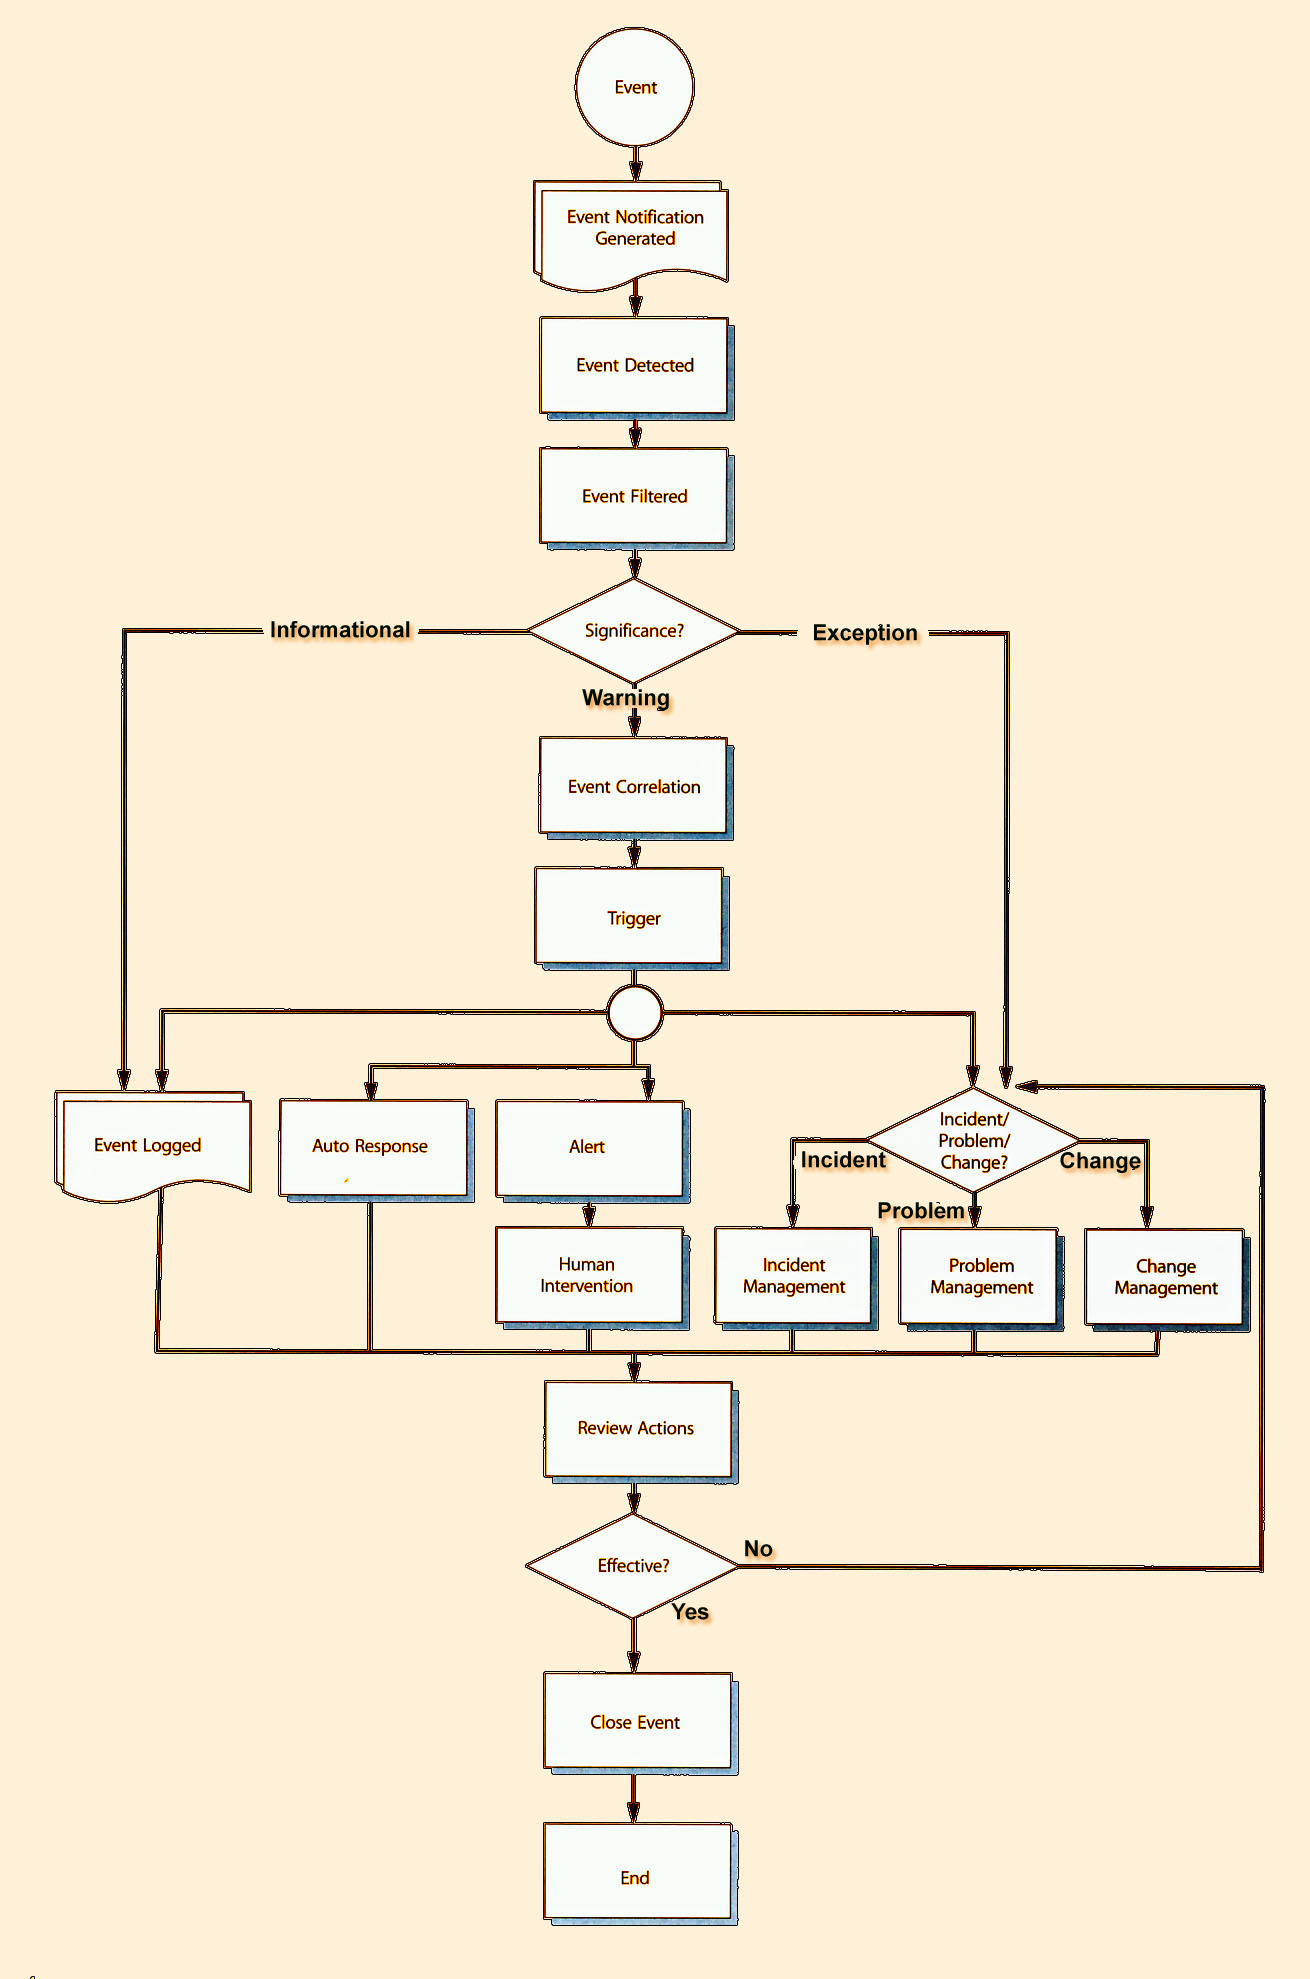 Figure 4.1 The Event Management process